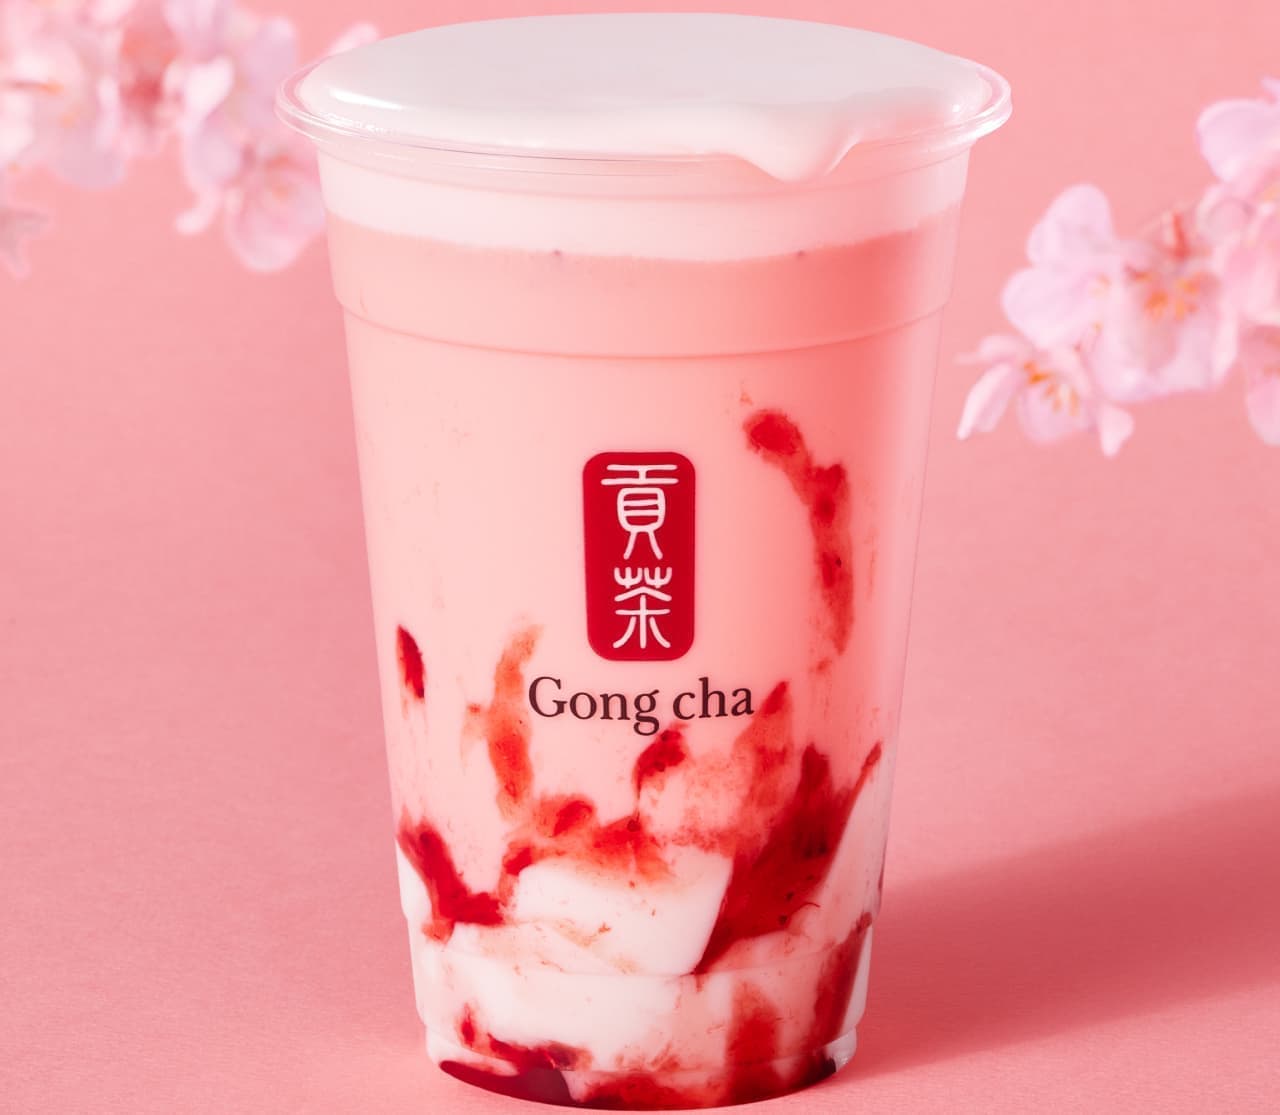 Gong Cha "Strawberry Apricot Milk Tea".